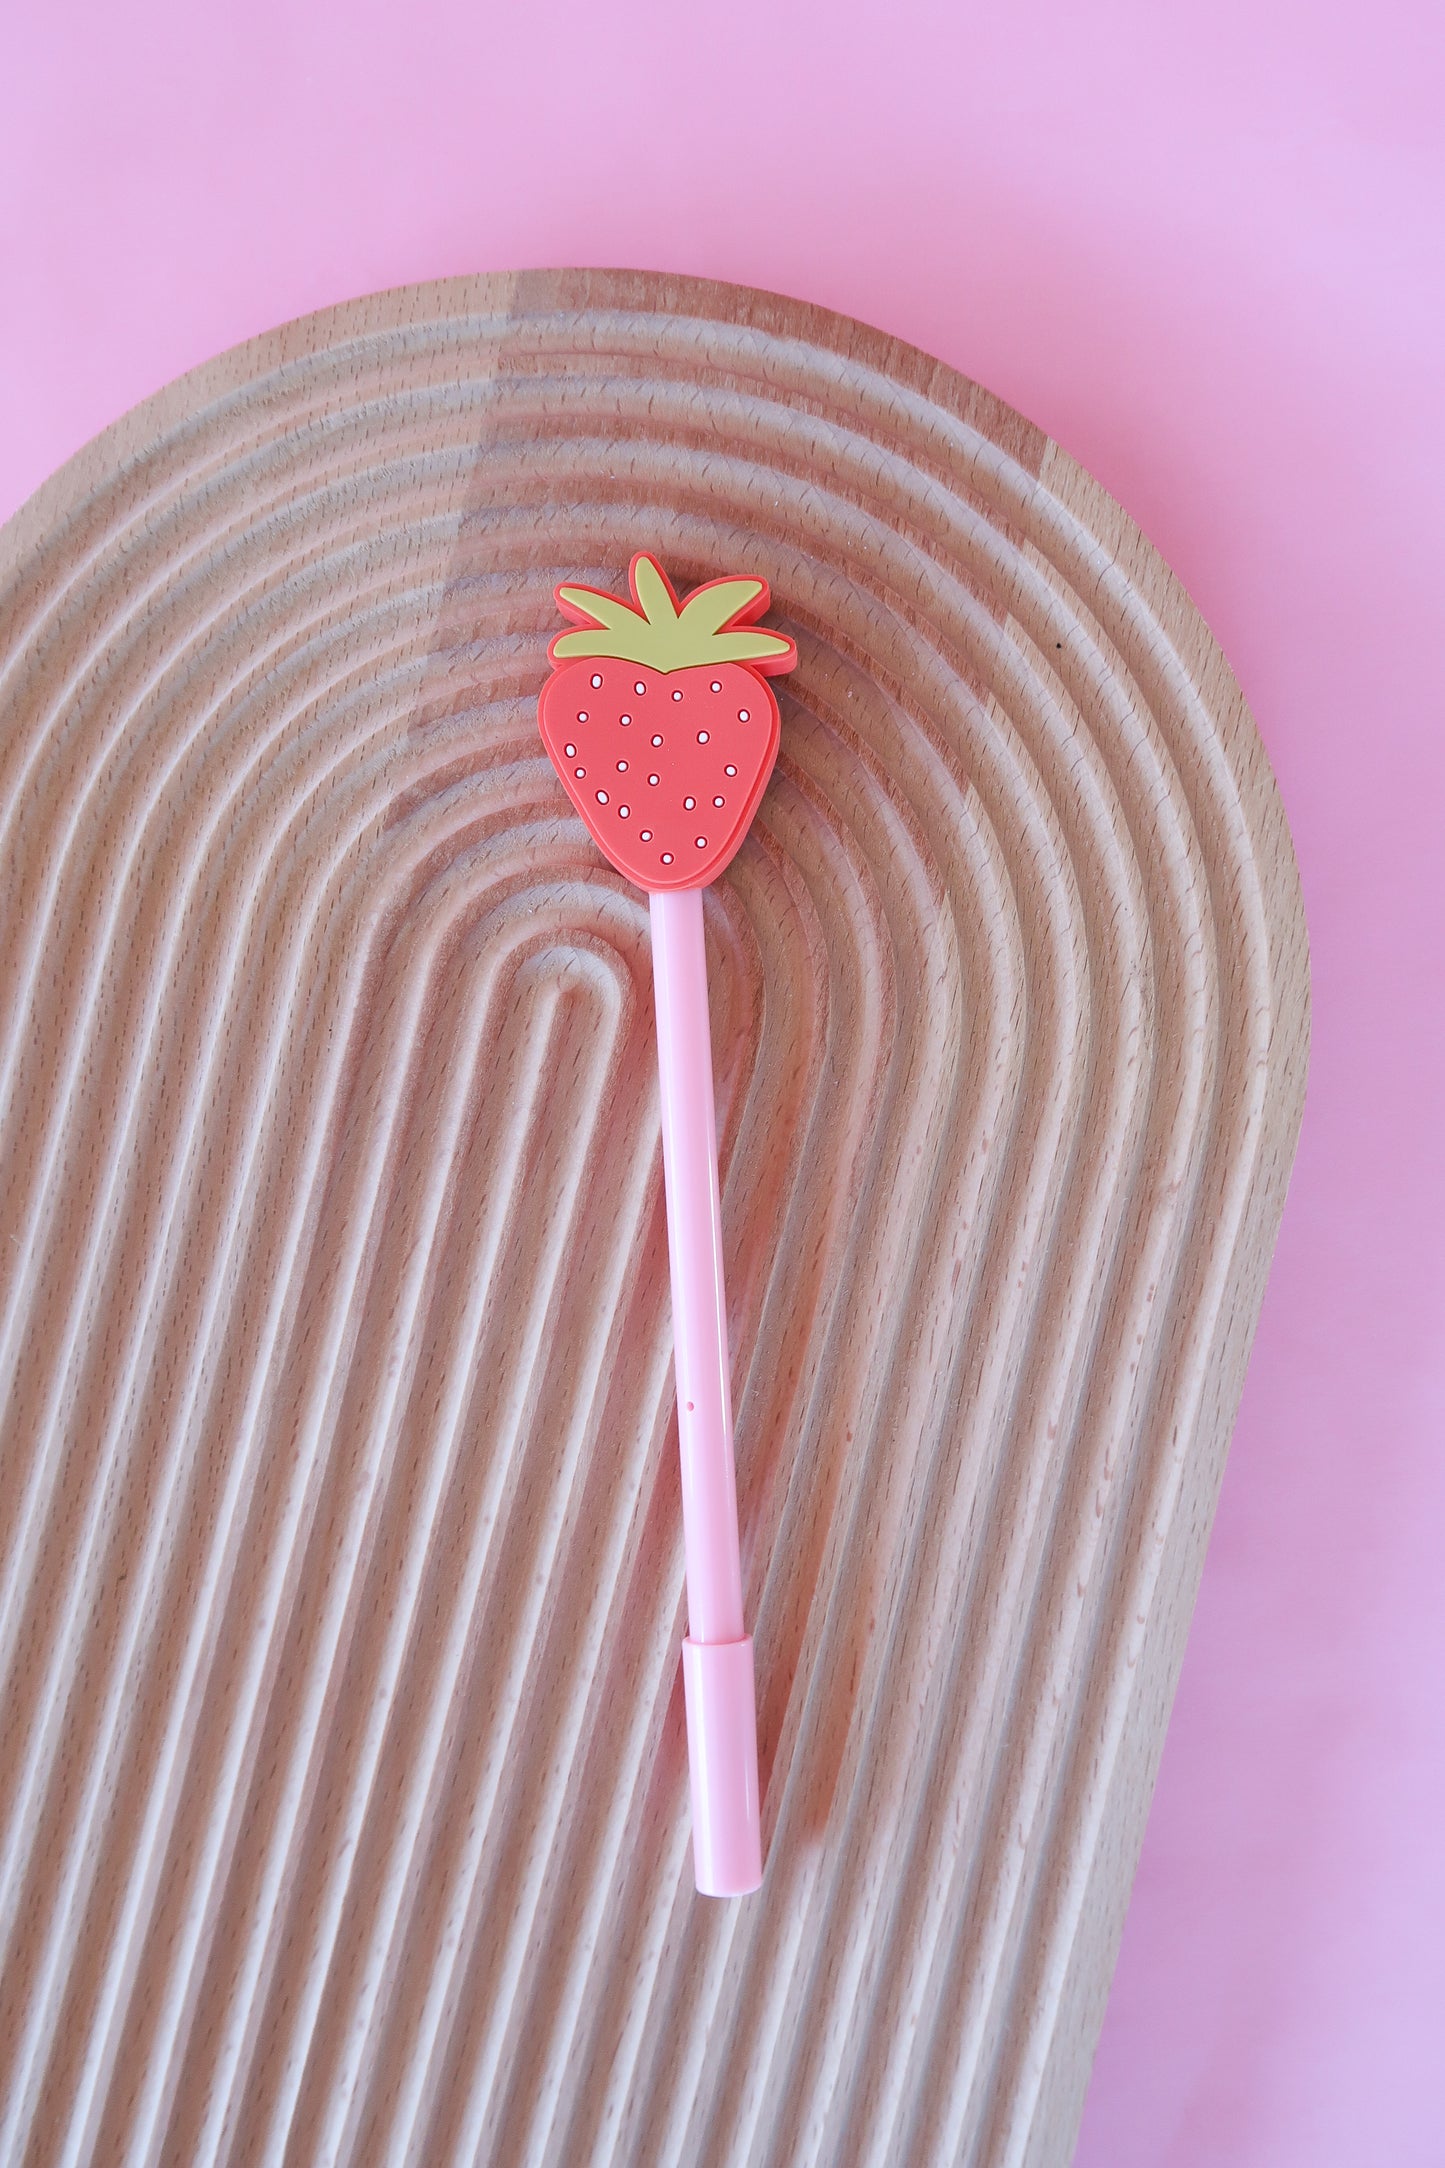 Strawberry Pen